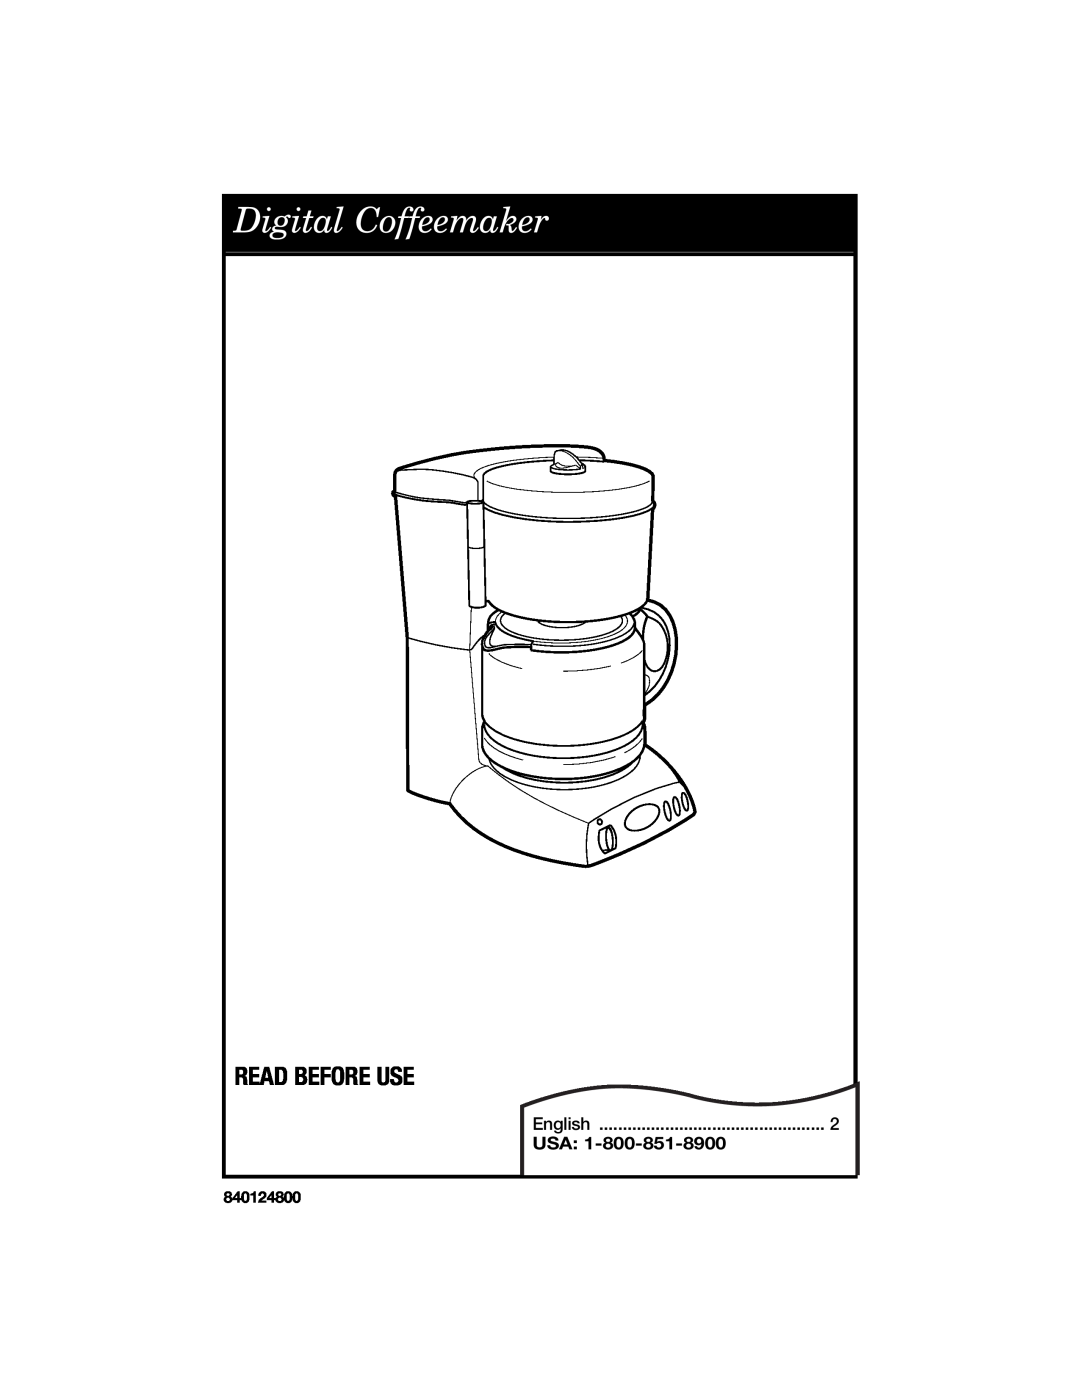 Hamilton Beach 840124800 manual Read Before Use, Digital Coffeemaker, English 